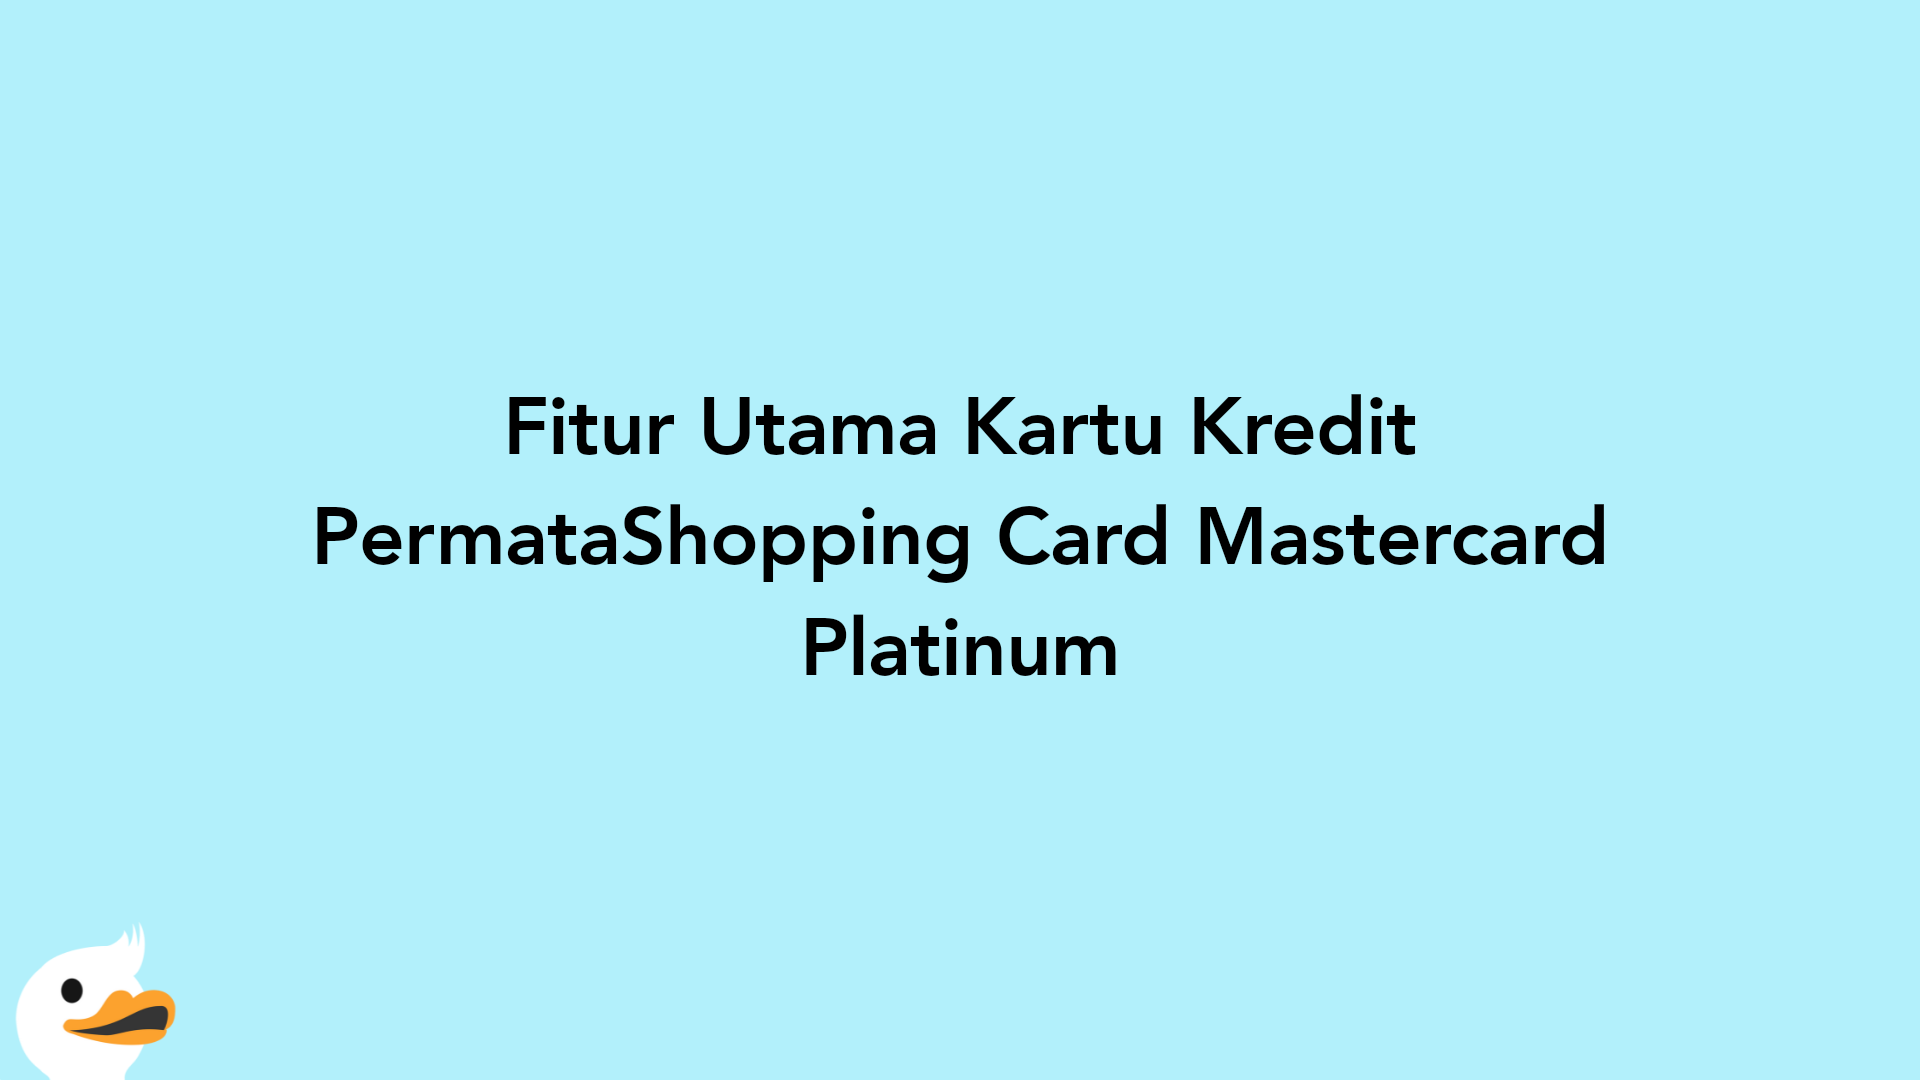 Fitur Utama Kartu Kredit PermataShopping Card Mastercard Platinum